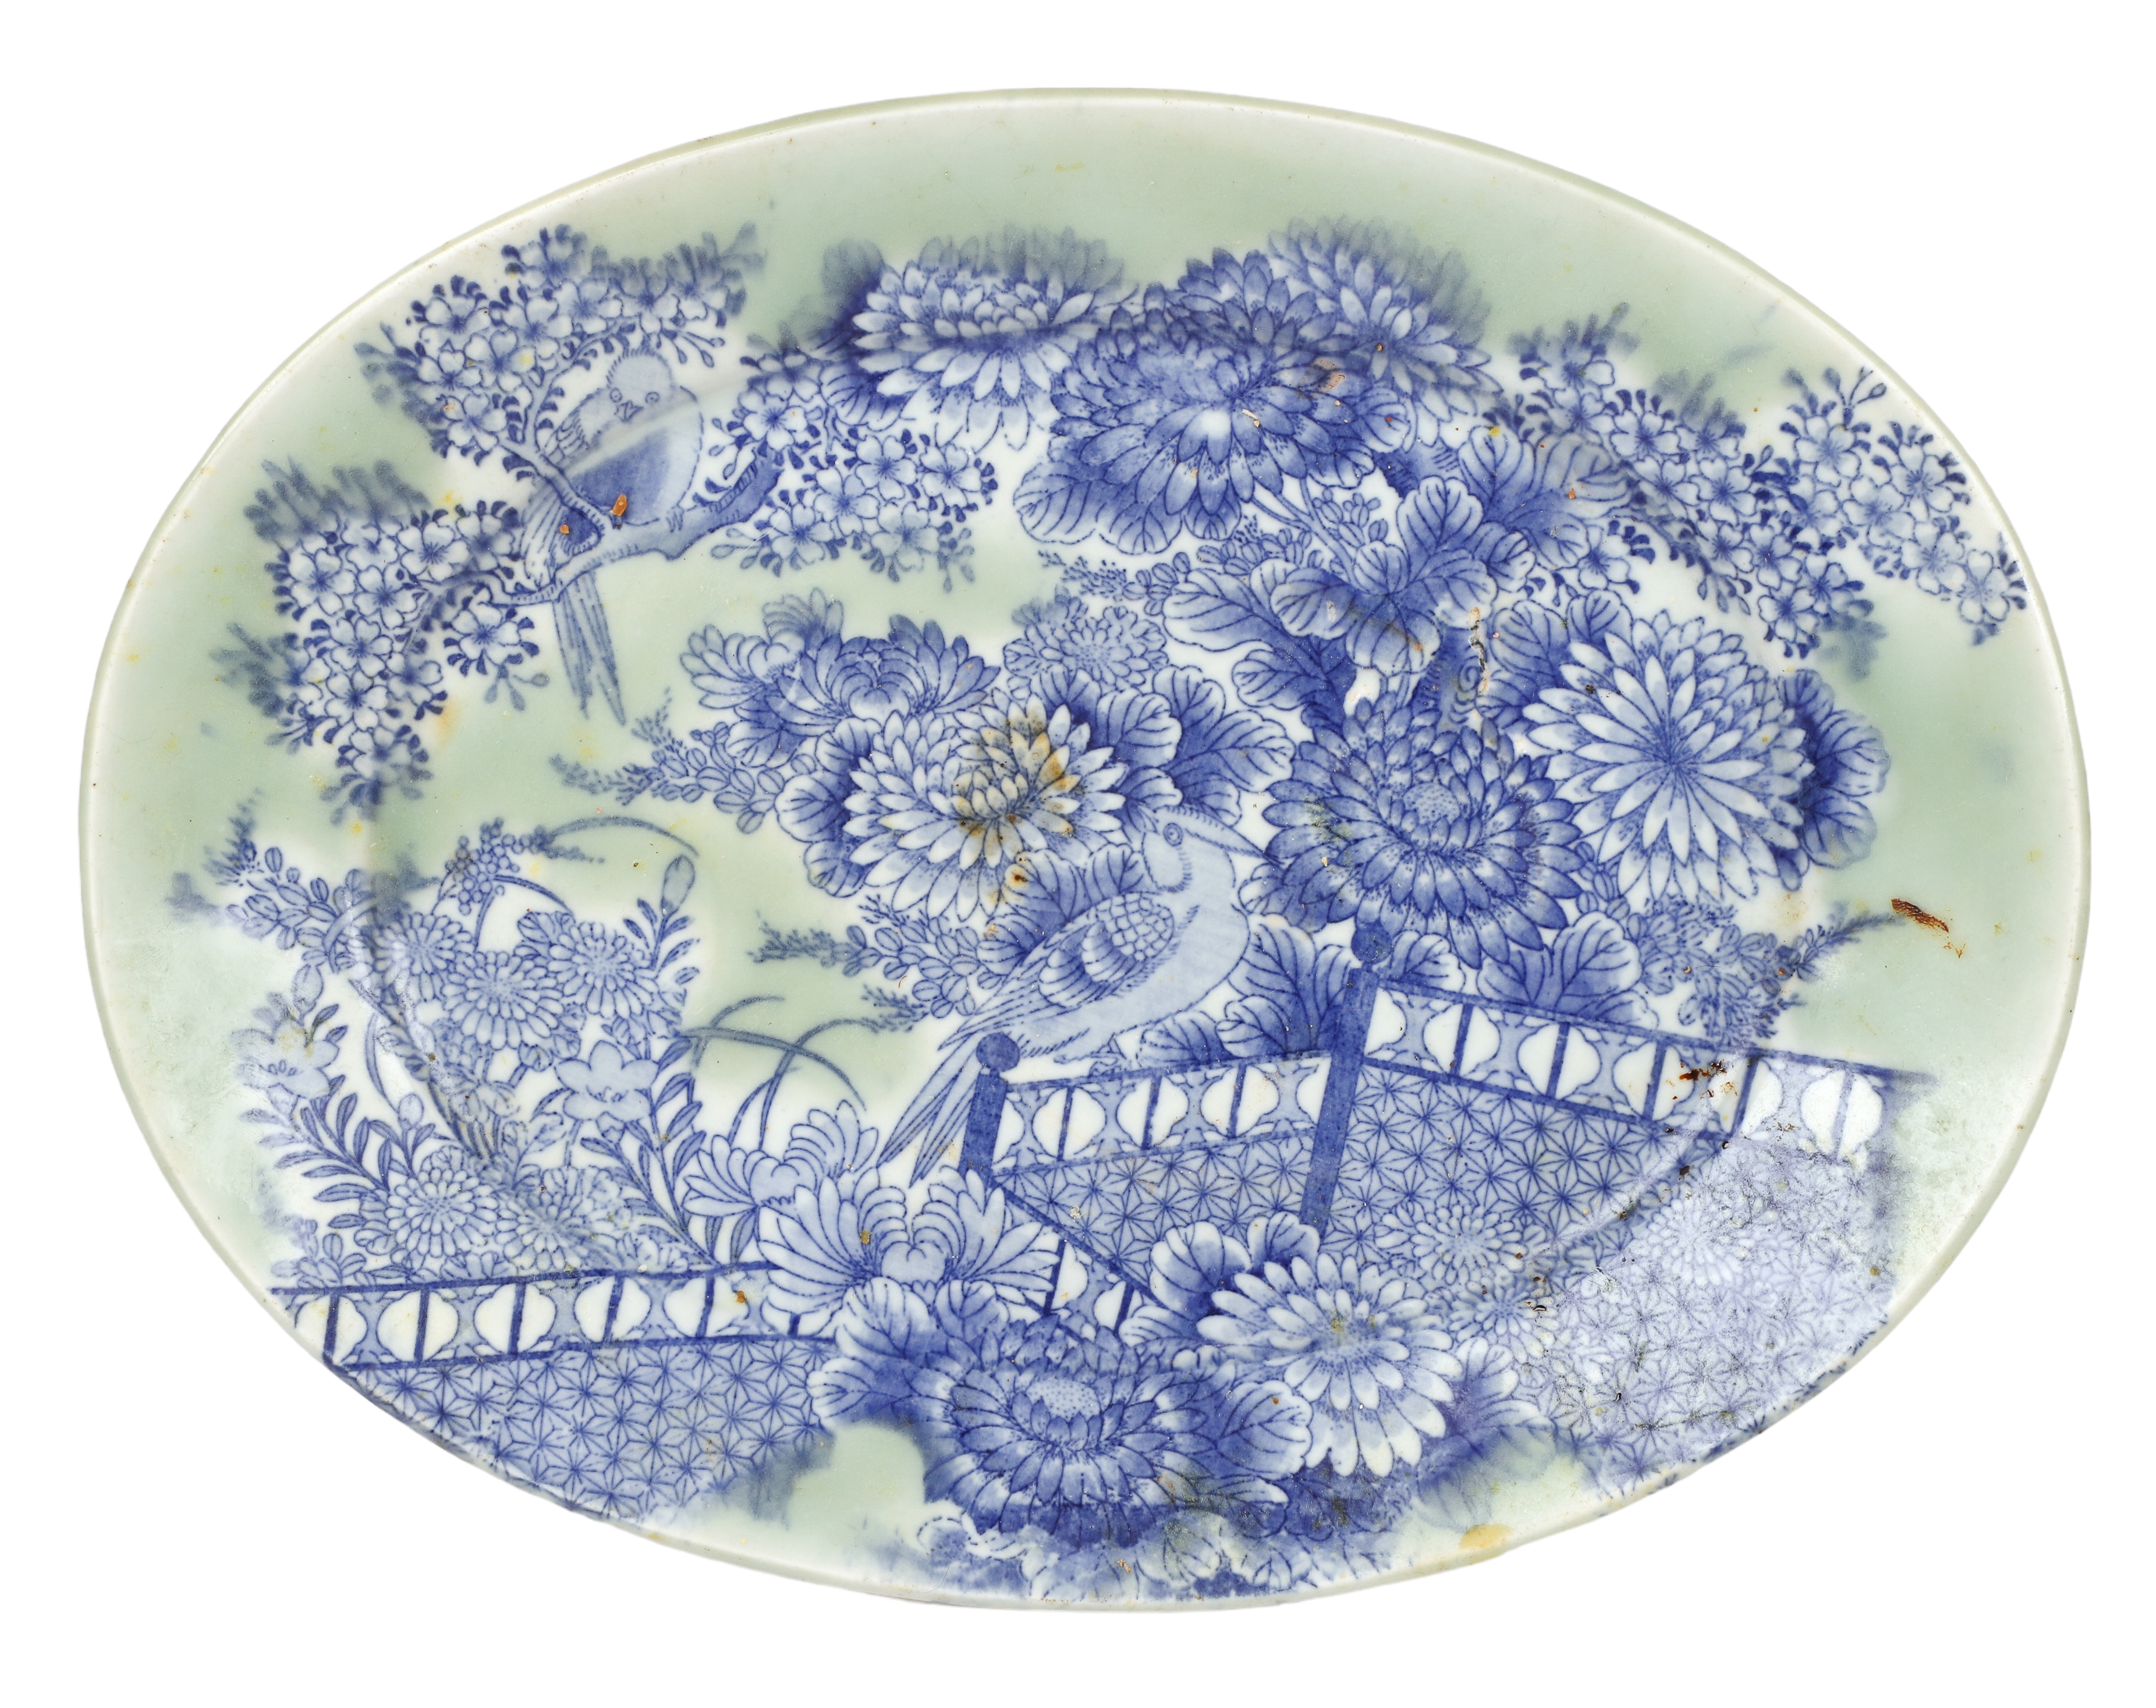 Japanese celadon oval platter, bird